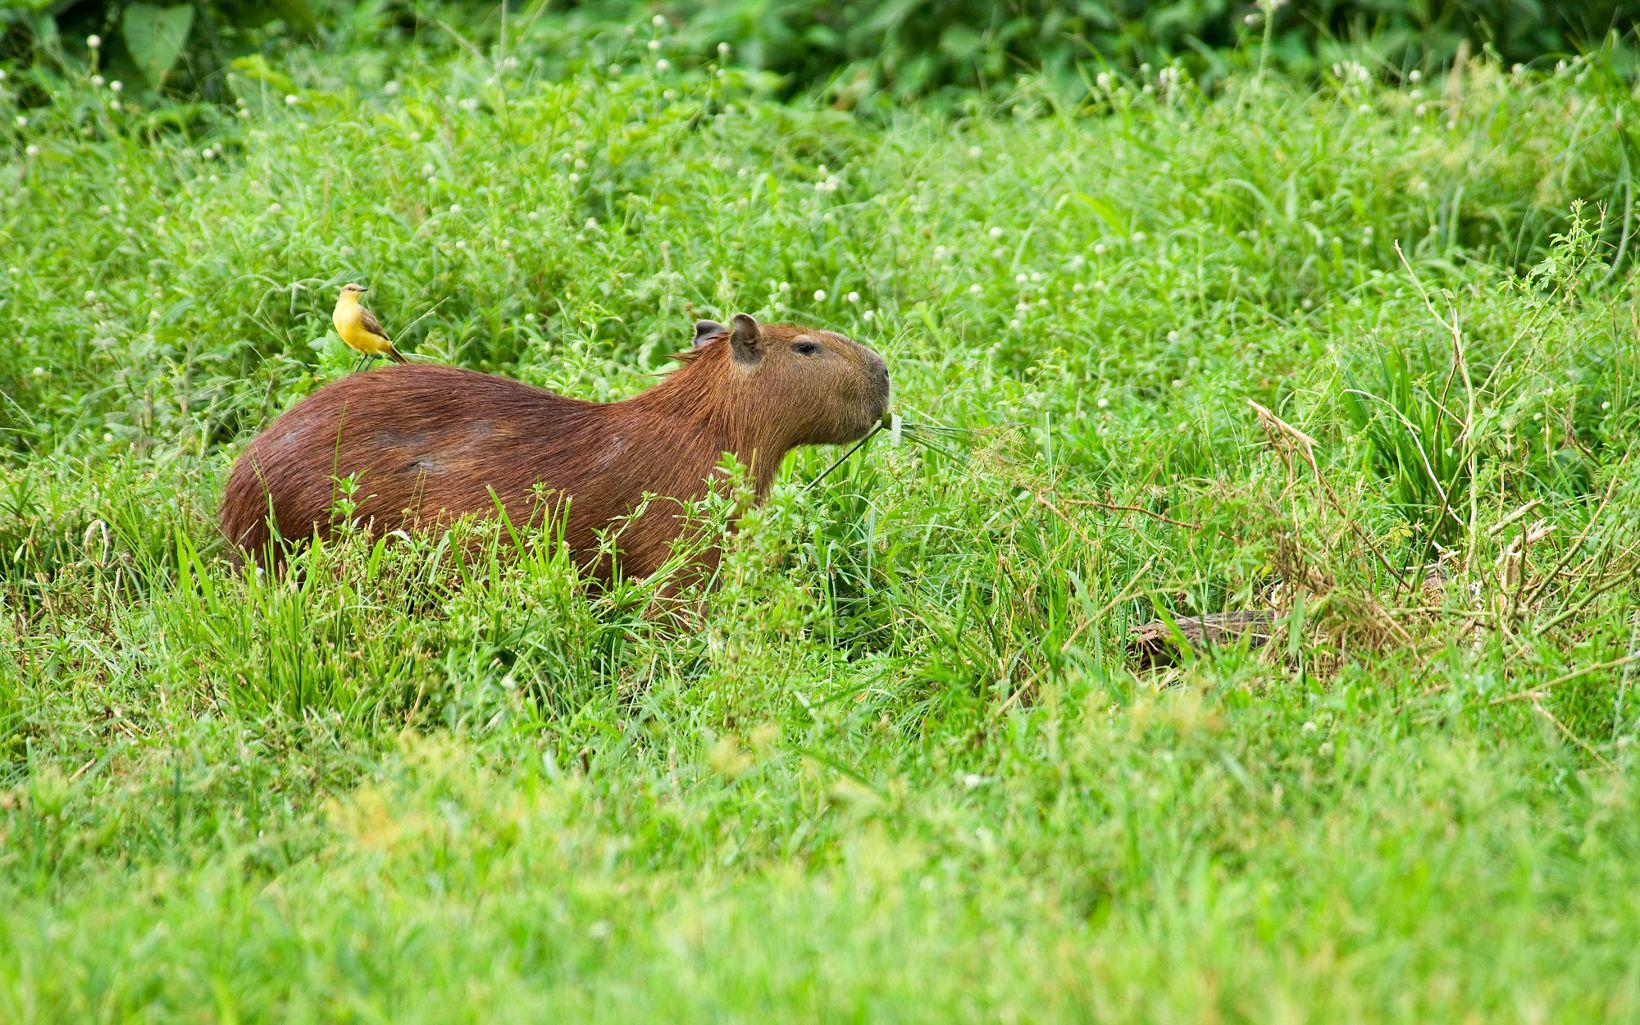 Cattle tyrant (Machetornis rixosa) riding a capybara (Hydrochaeris hydrochaeris) in the Llanos grasslands of Venezuela.